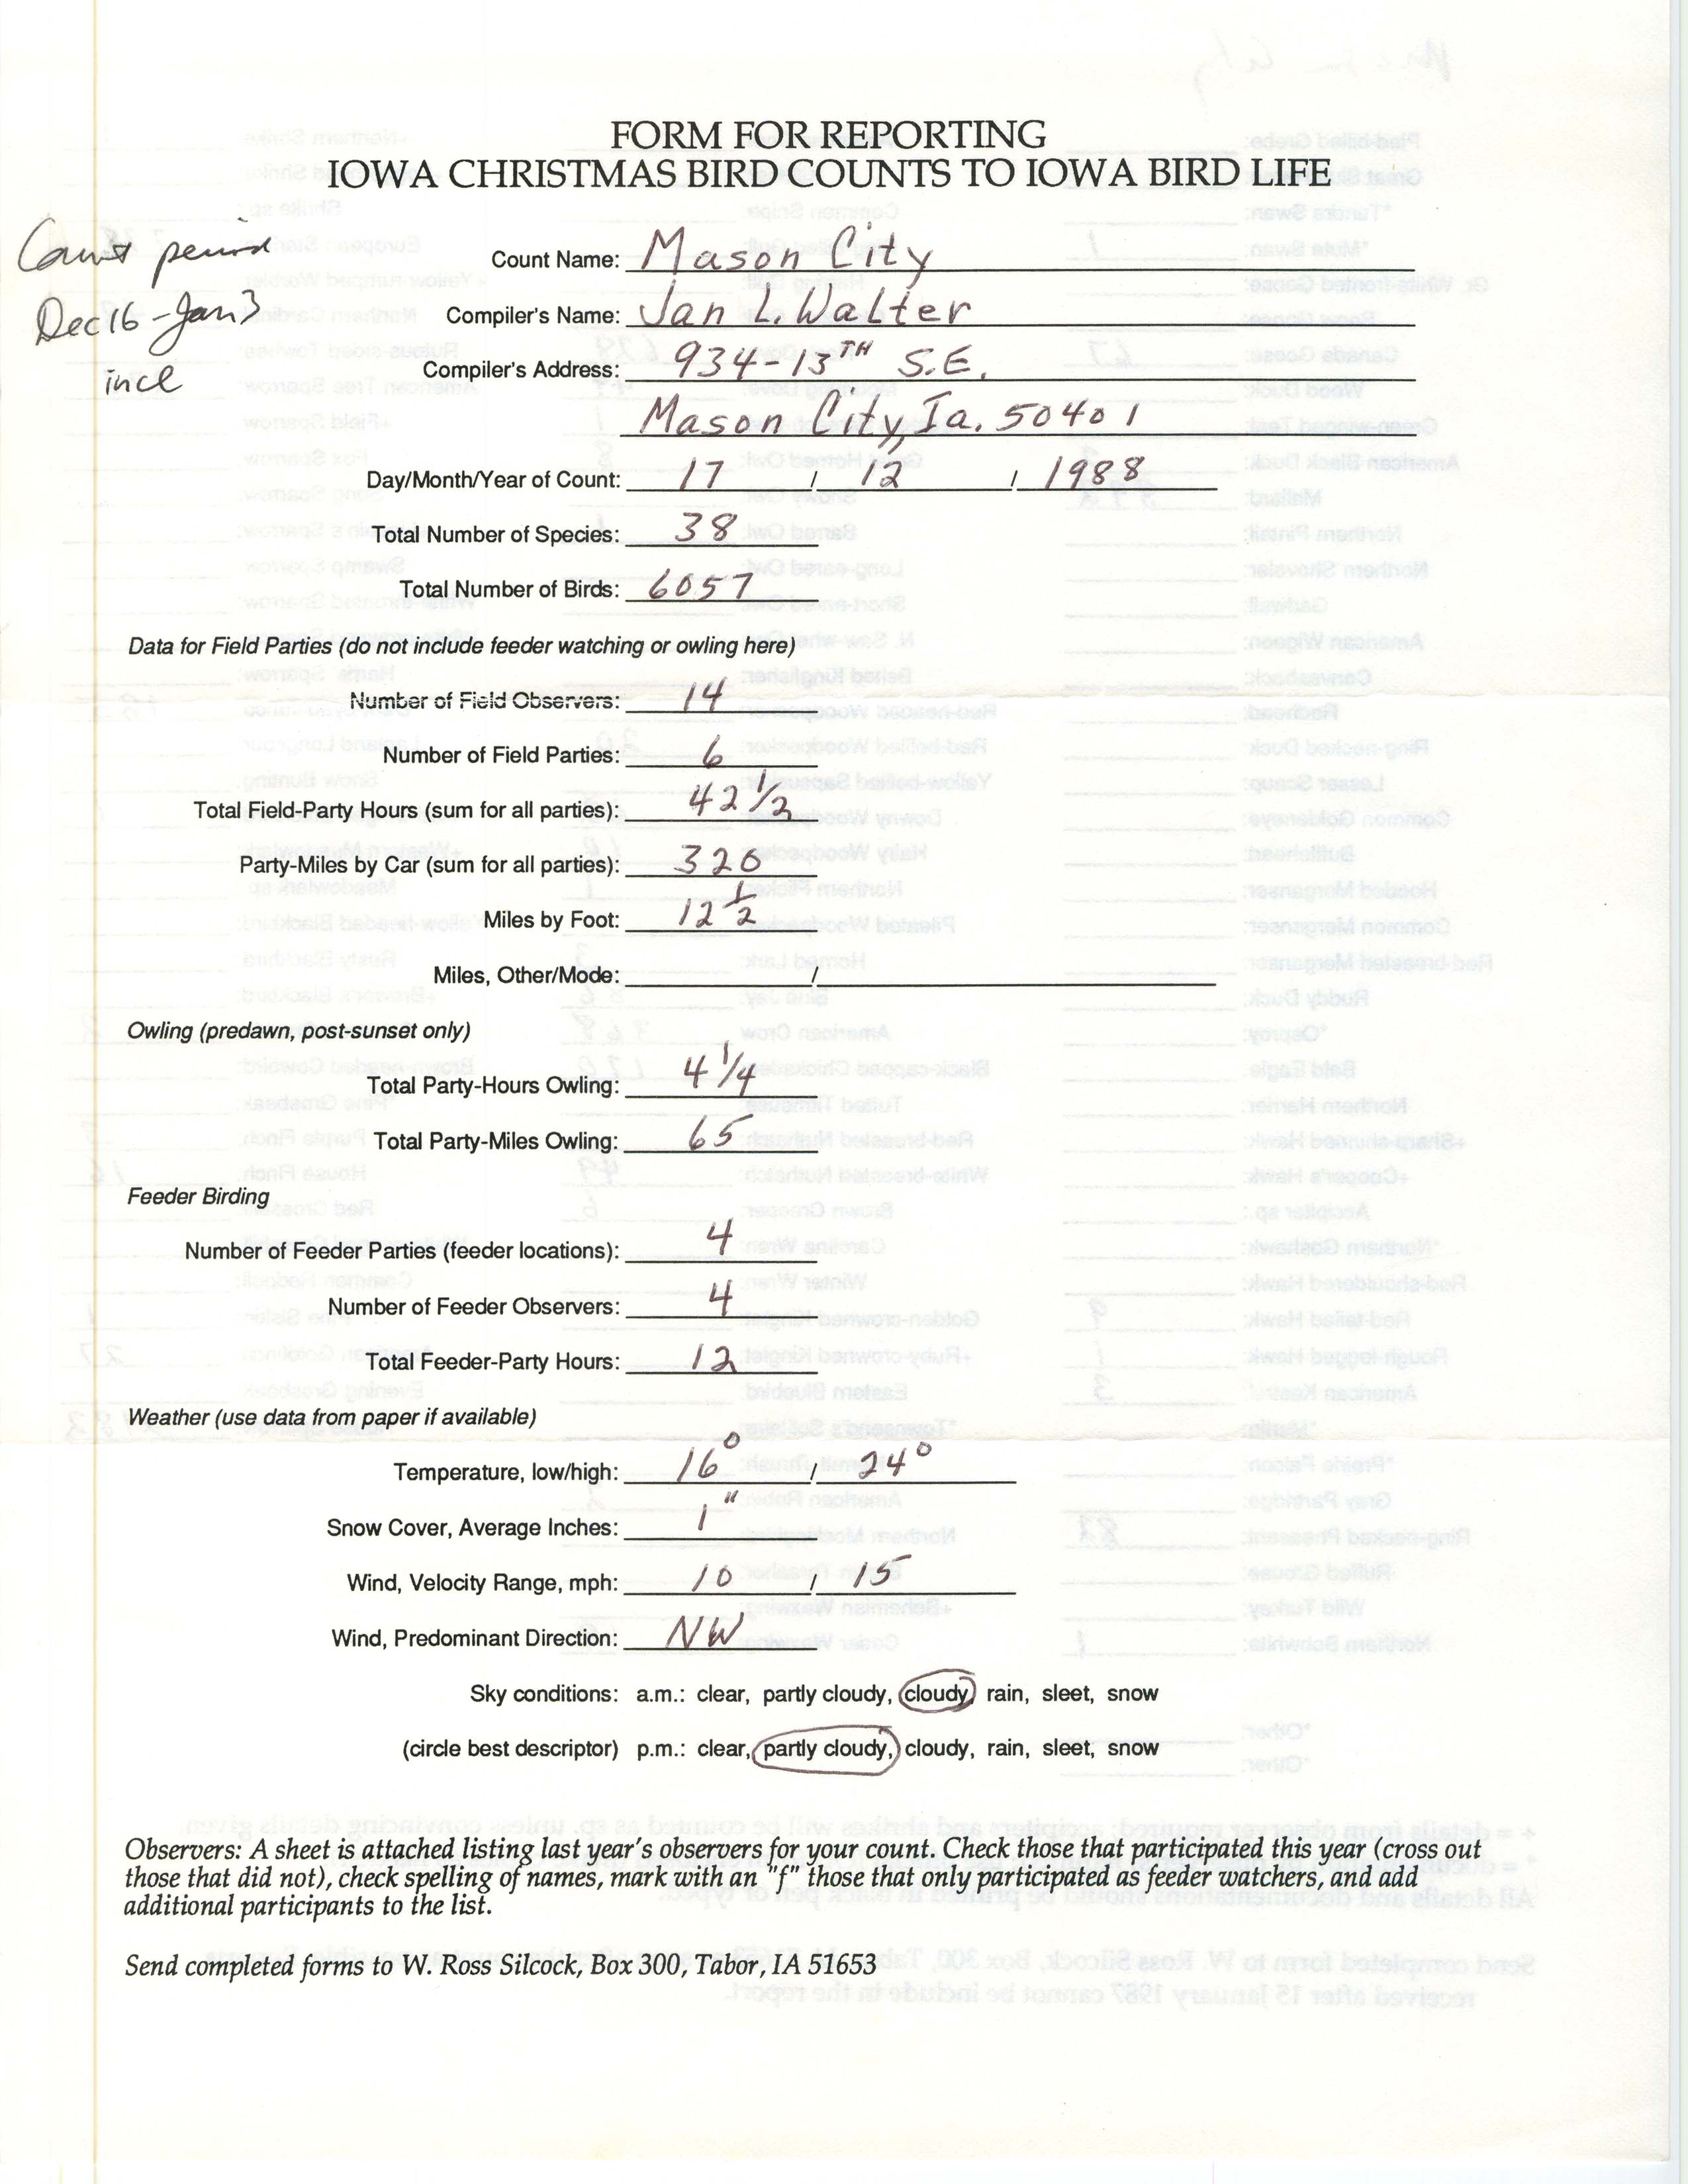 Form for reporting Iowa Christmas bird counts to Iowa Bird Life, Jan L. Walter, December 17, 1988